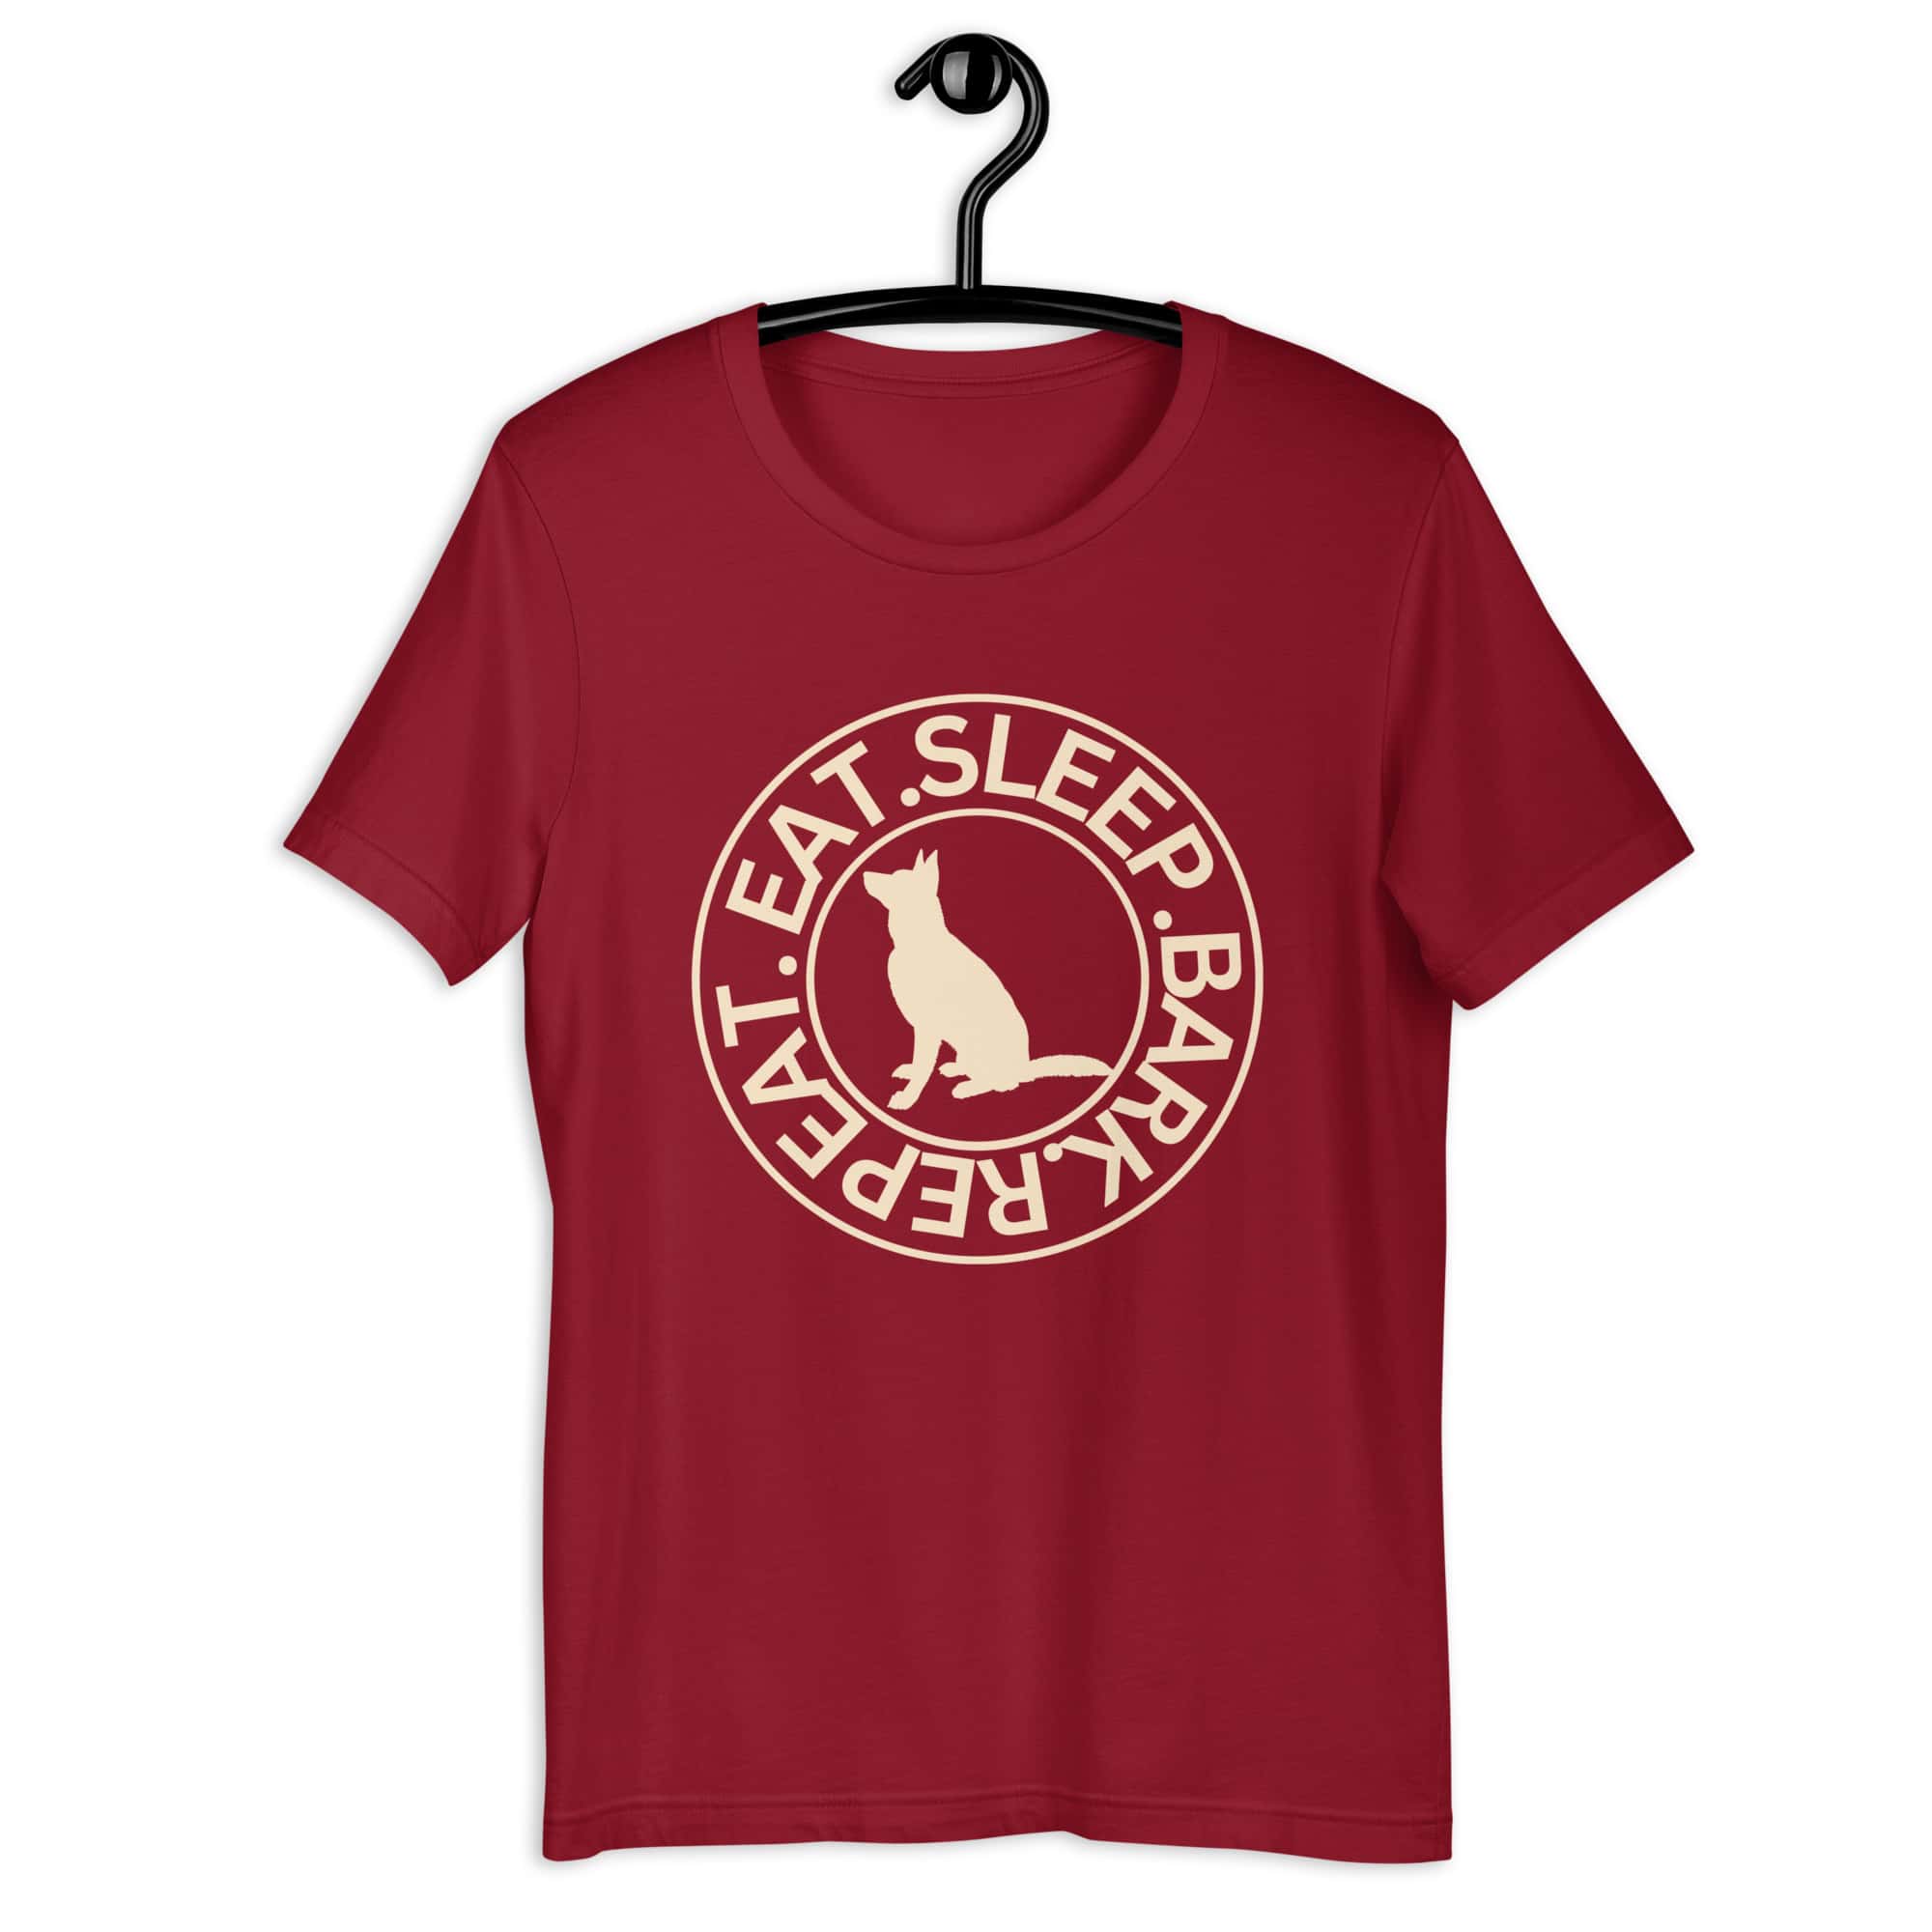 Eat Sleep Bark Repeat German Shepherd Unisex T-Shirt. Cardinal